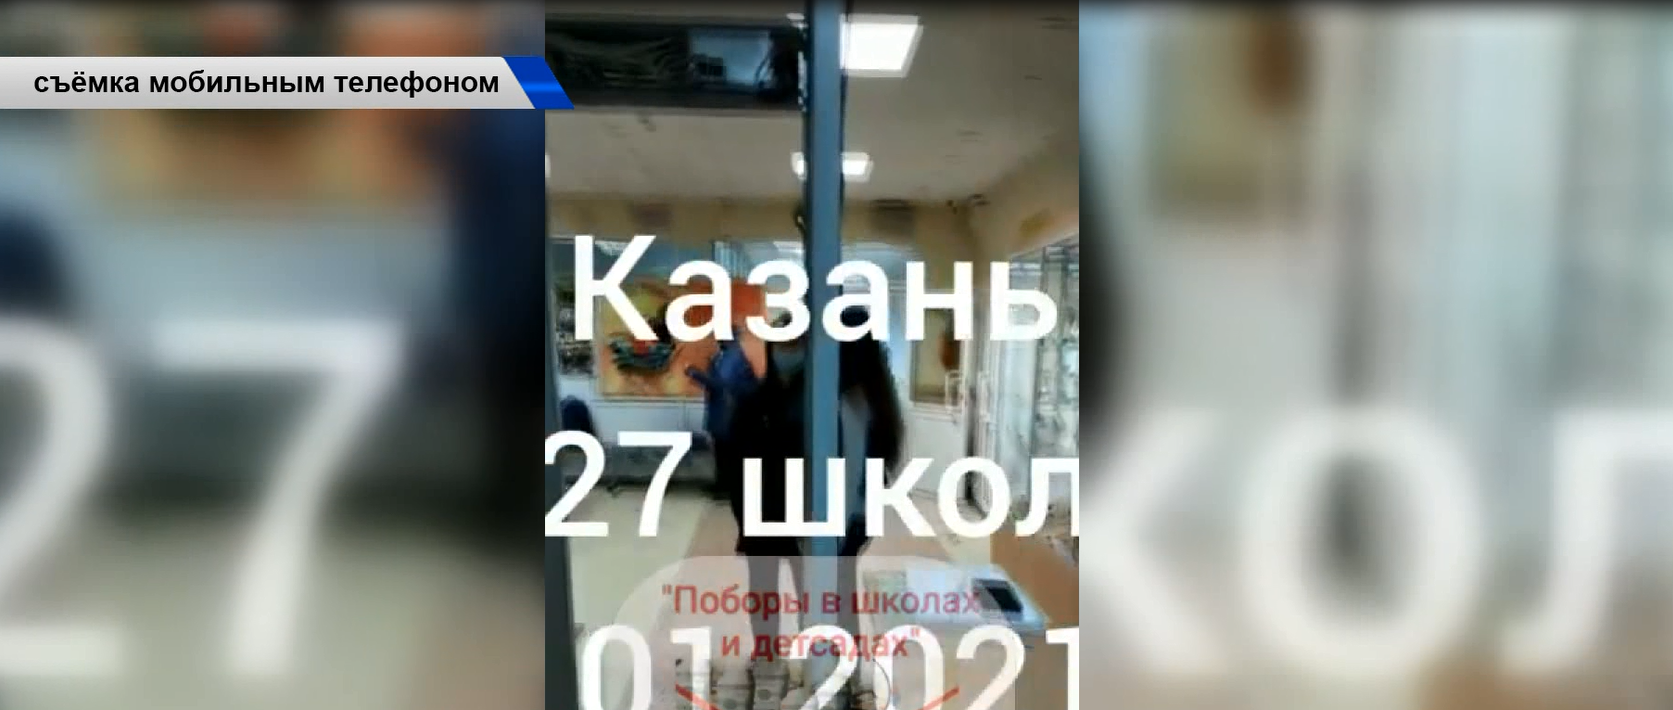 ТНВ Татарстан 24.05.2022 последний звонок школа 139 архив. Отменят ли учебу из за теракта